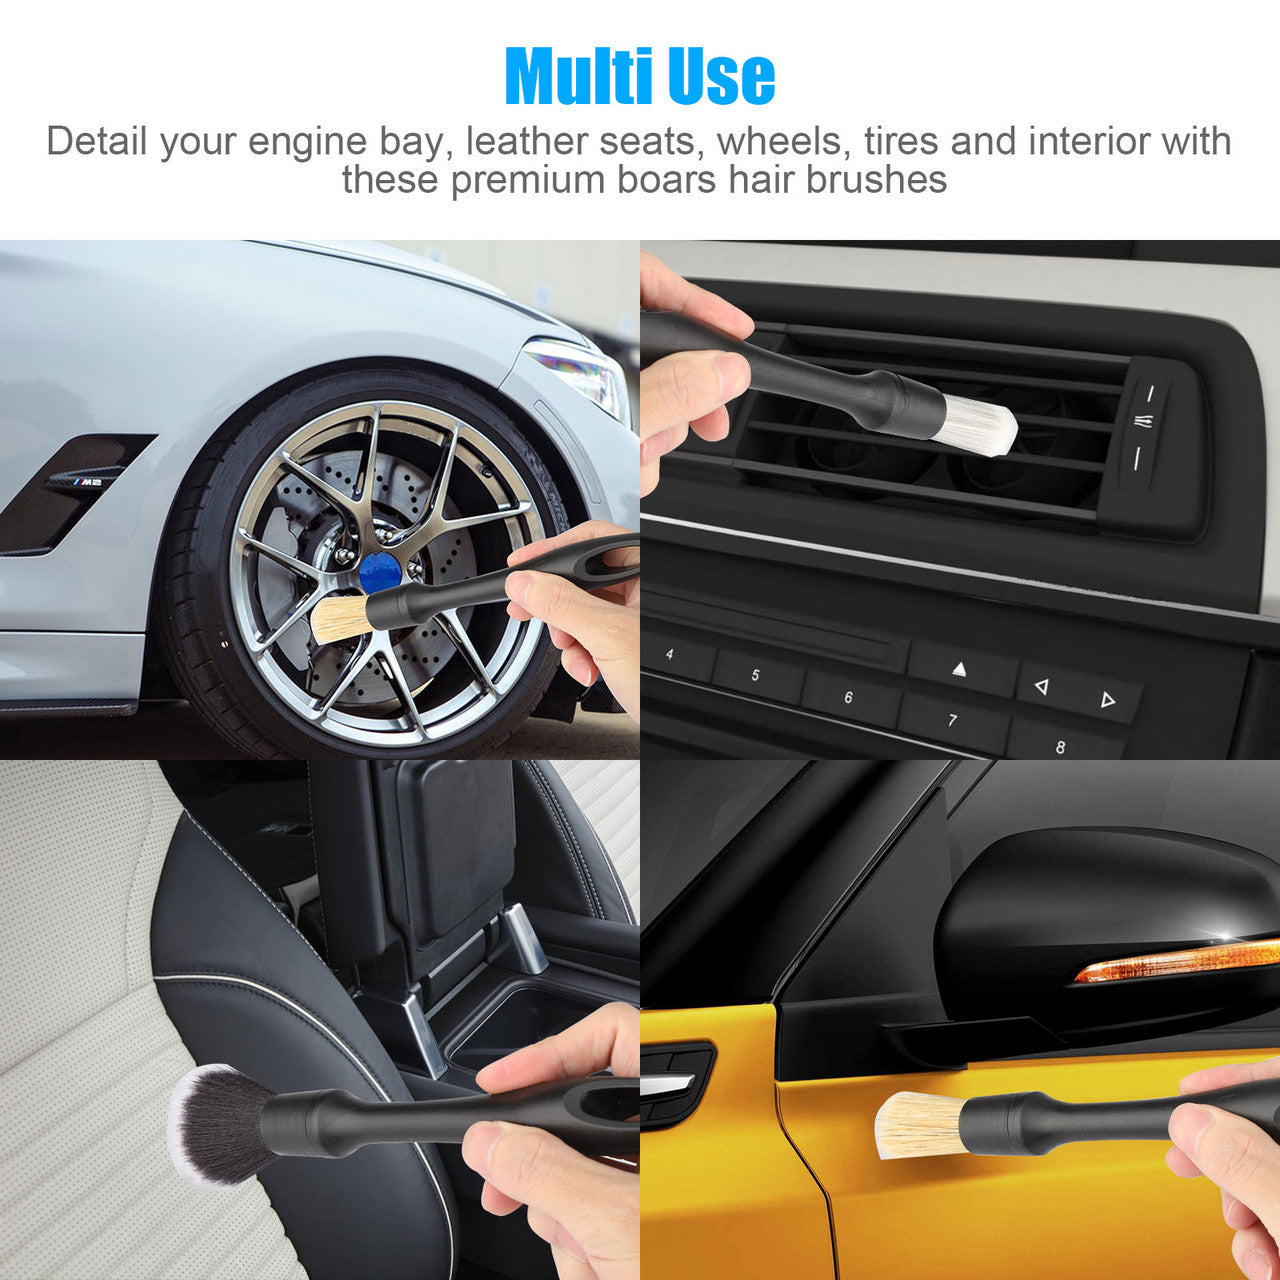 Automotive Accessory Professional Quality Car Detail Brush Kit with a Metal Design, 3Pcs